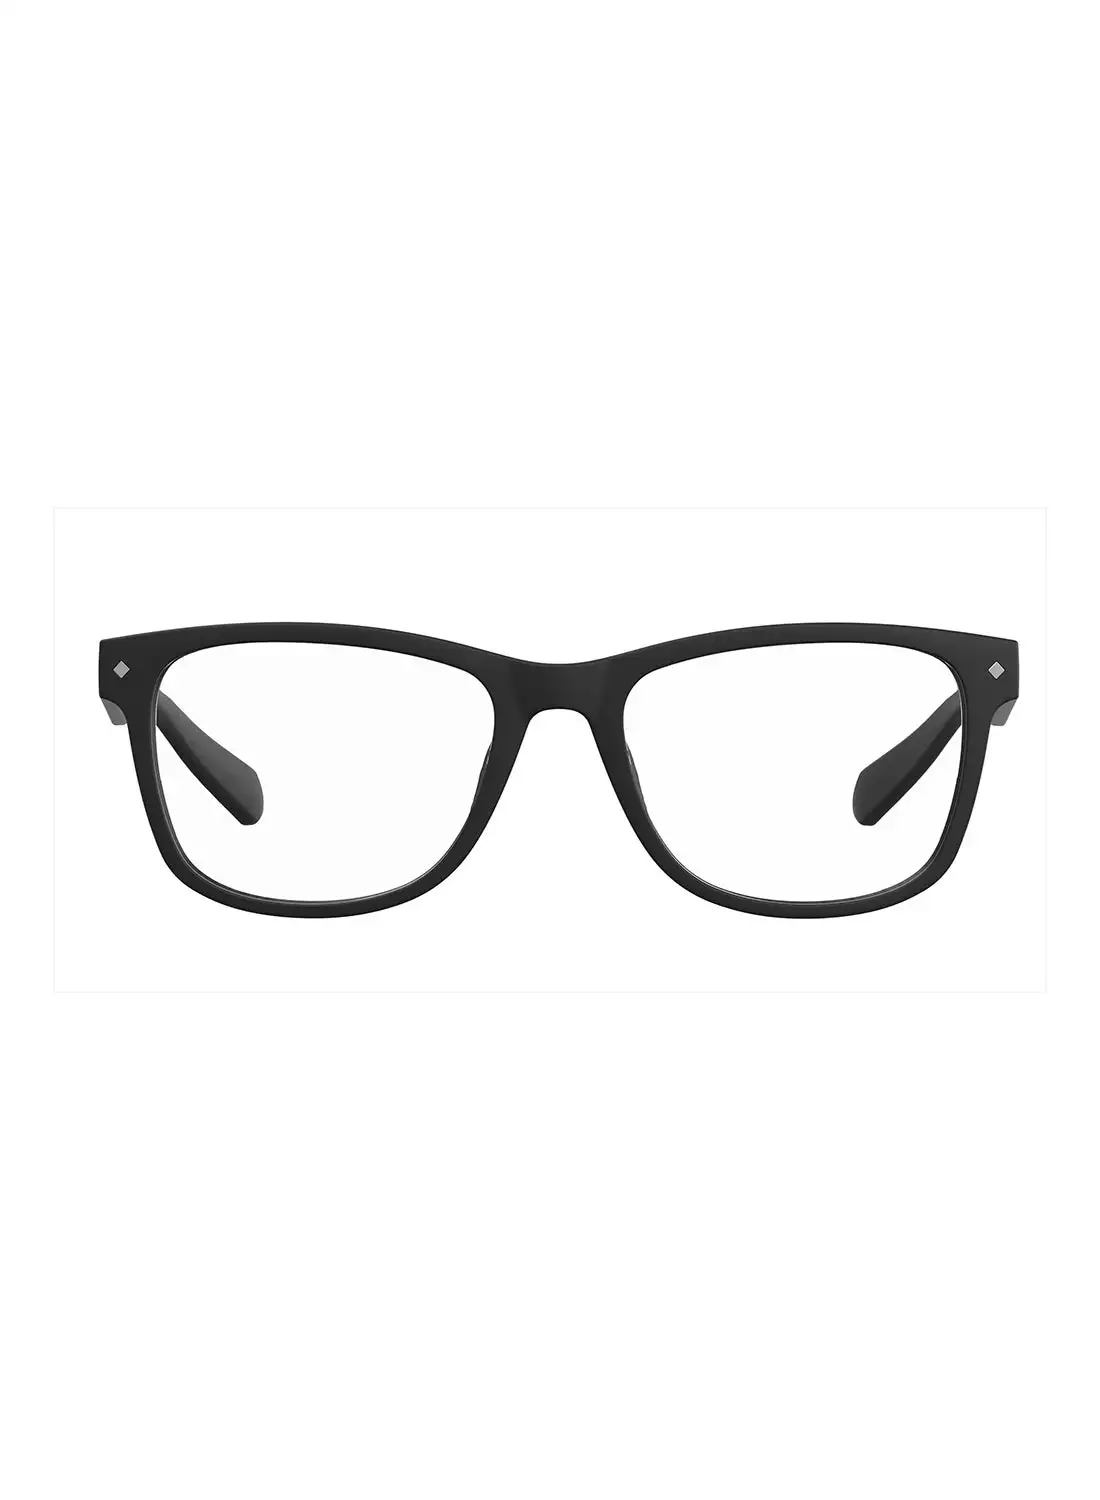 Polaroid Unisex Square Reading Glasses - Pld 0020/R Black 52 - Lens Size: 52 Mm